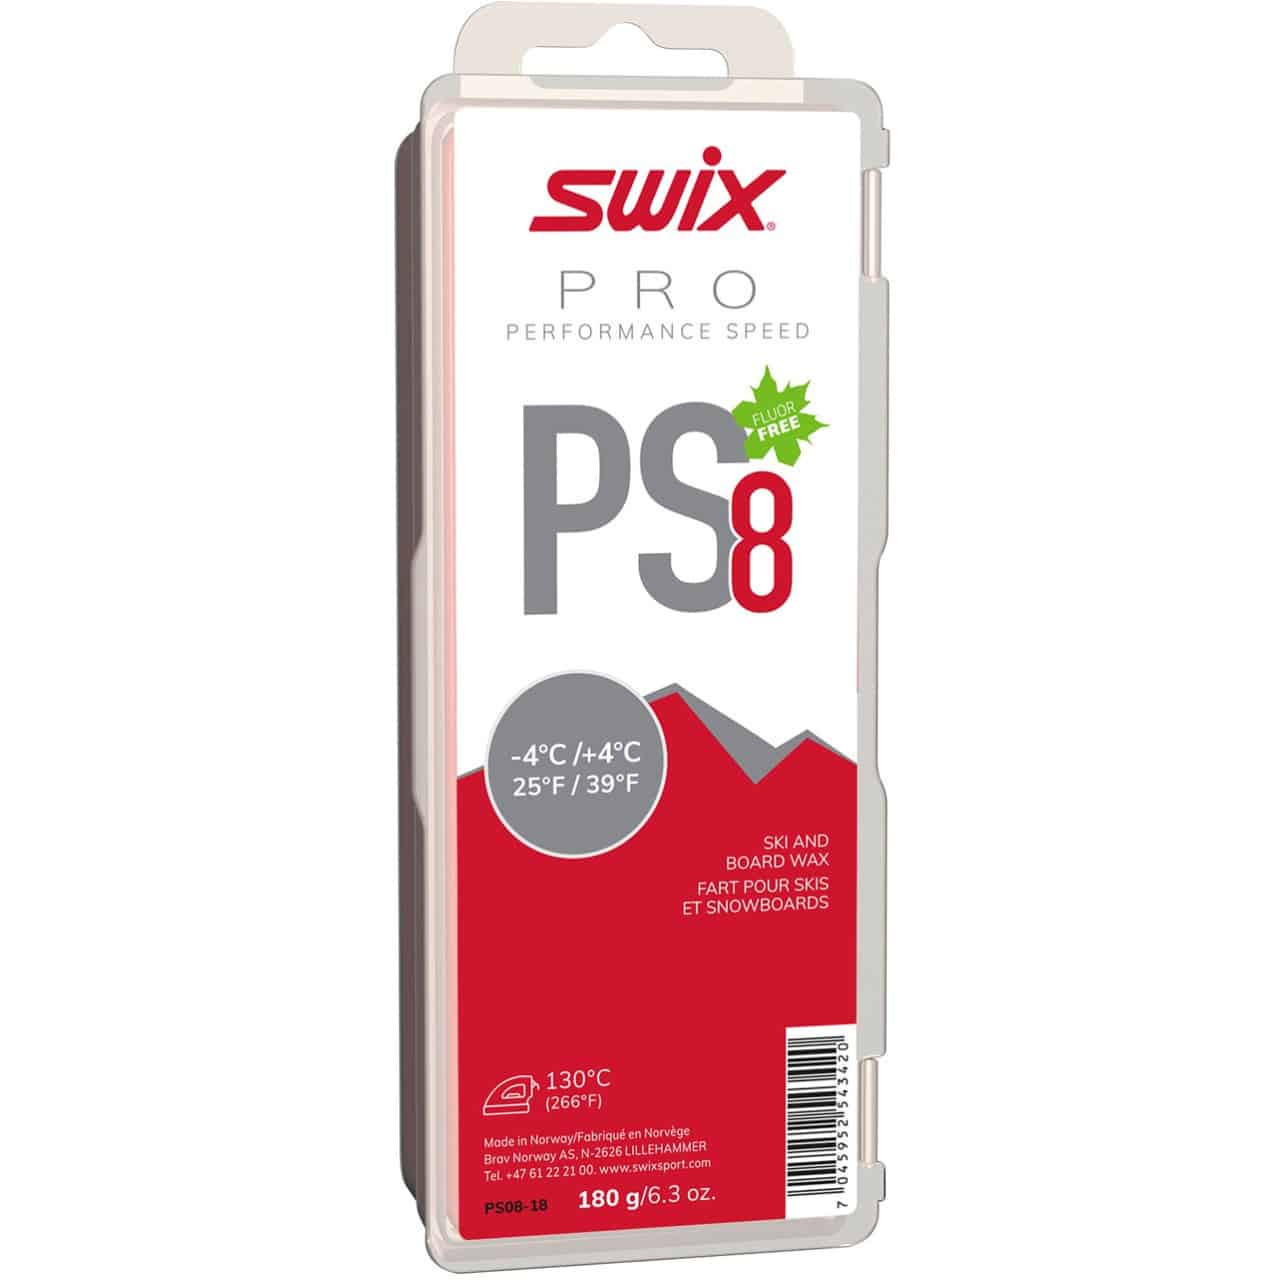 Swix Ps8 Red 4 C 4 C 180 G Low Prices At Xspo